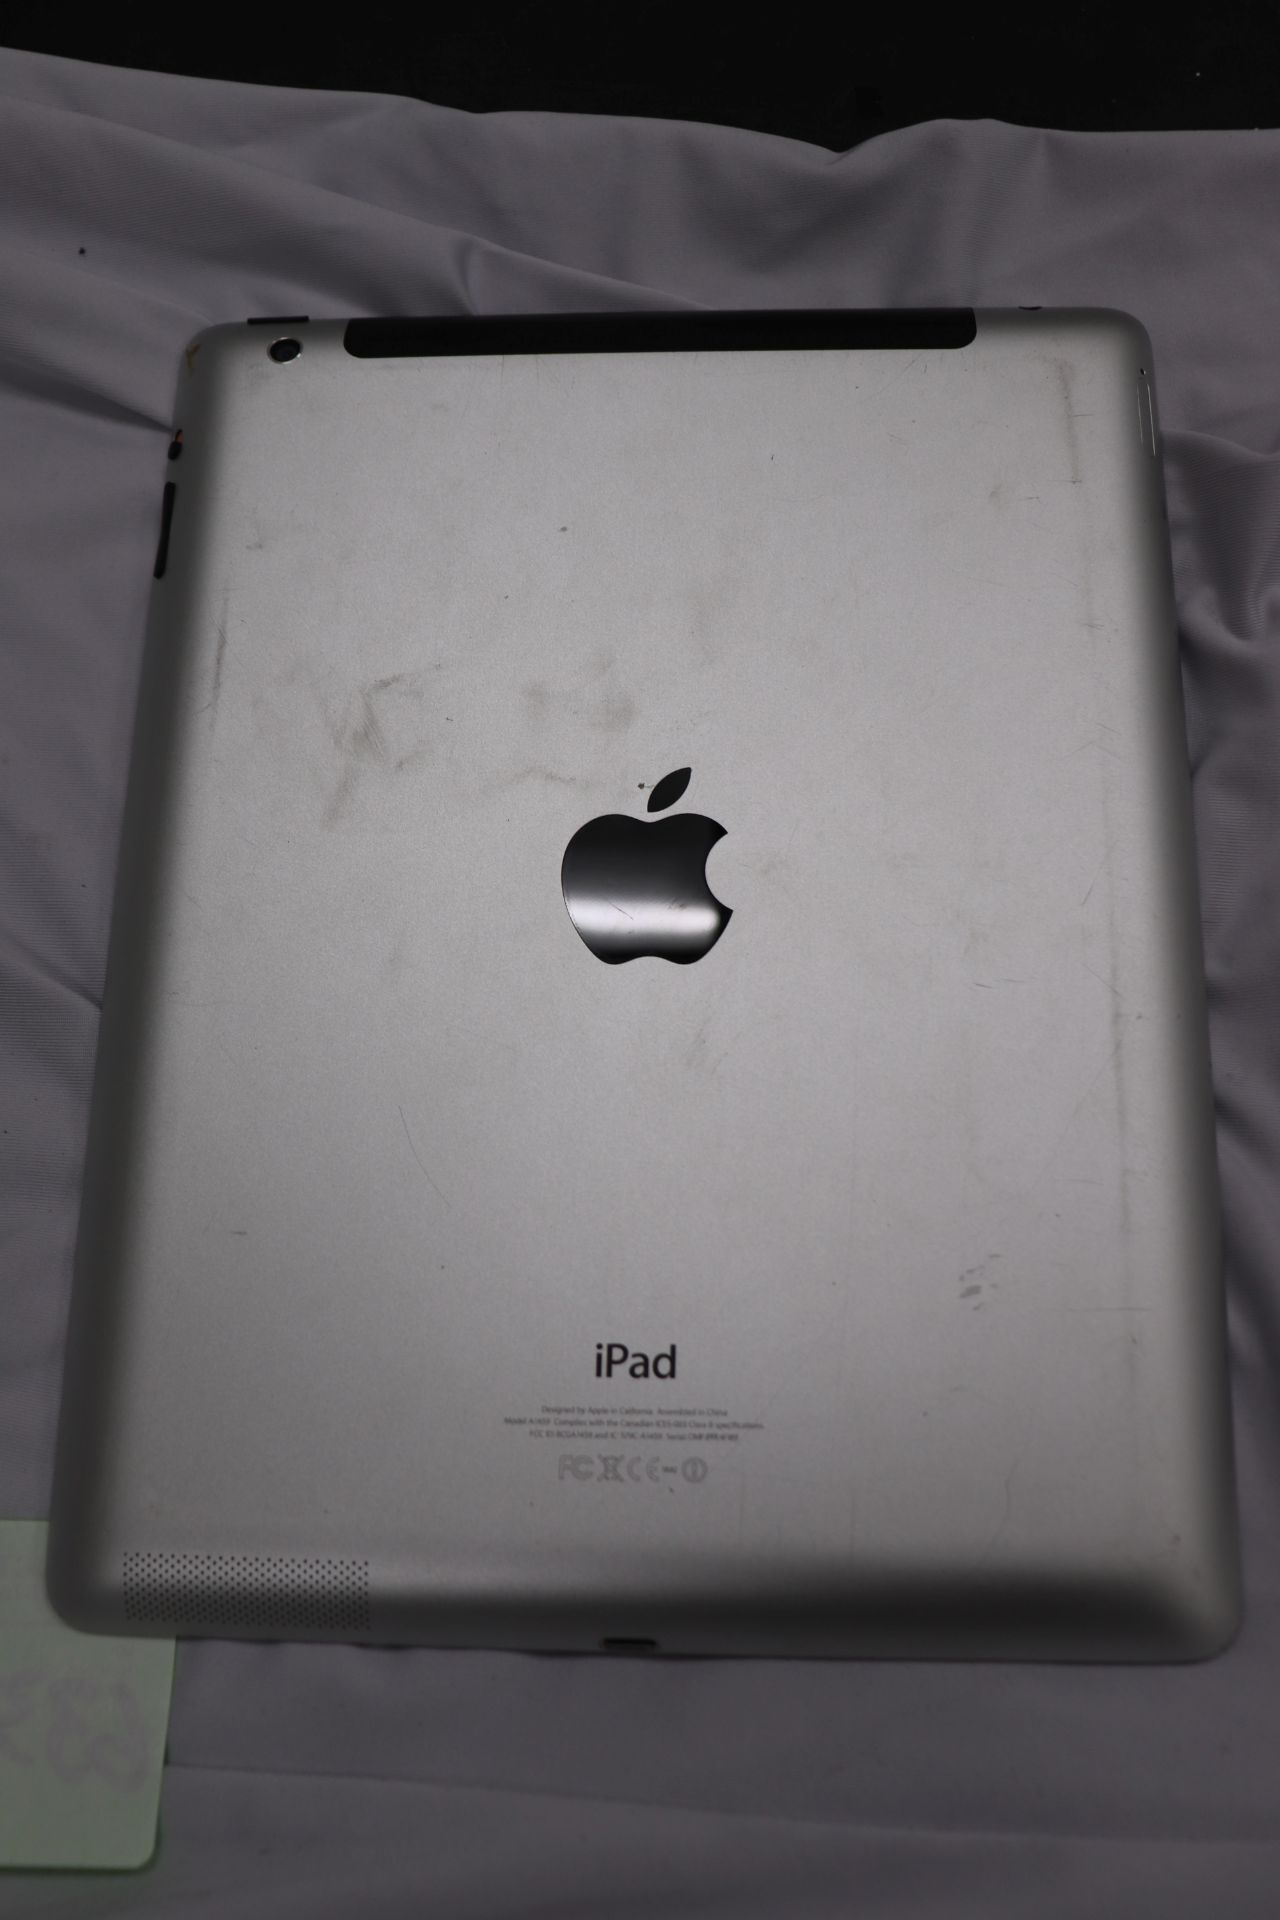 Apple iPad, model A1459 - Image 3 of 4